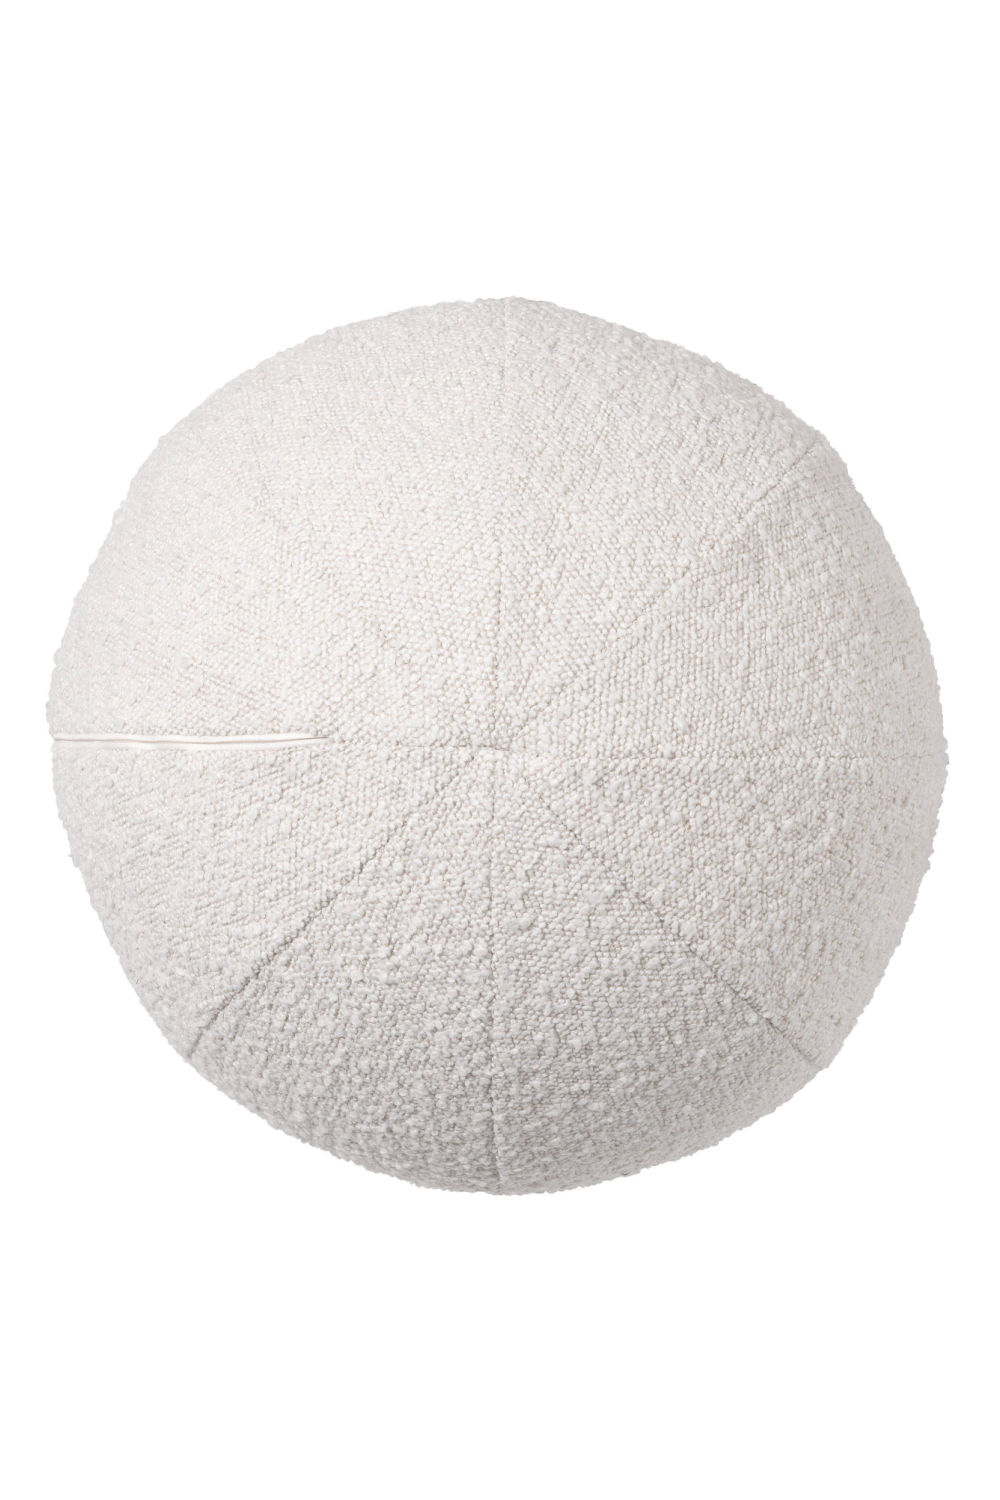 Bouclé Cream Ball Shaped Pillow | Eichholtz Palla L | OROA.com